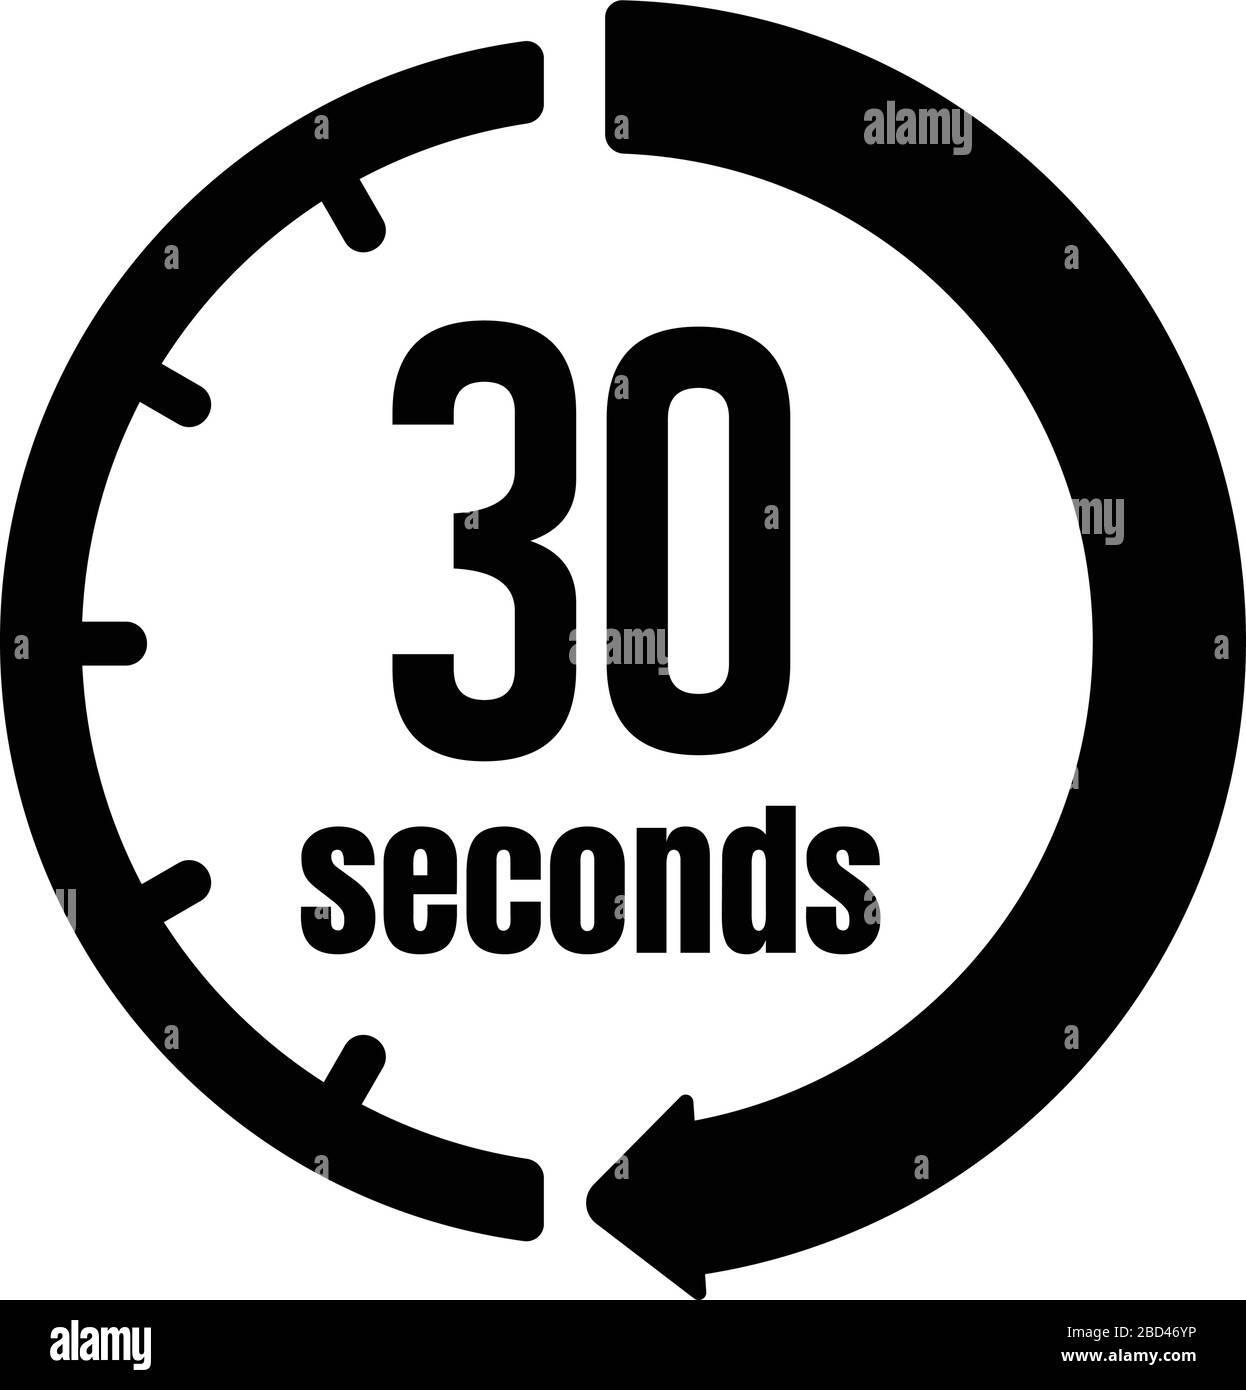 Через 30 минут выключишься. Значок таймера. Таймер часы 30 секунд. Таймер пиктограмма 30 секунд. Значок 30 минут.